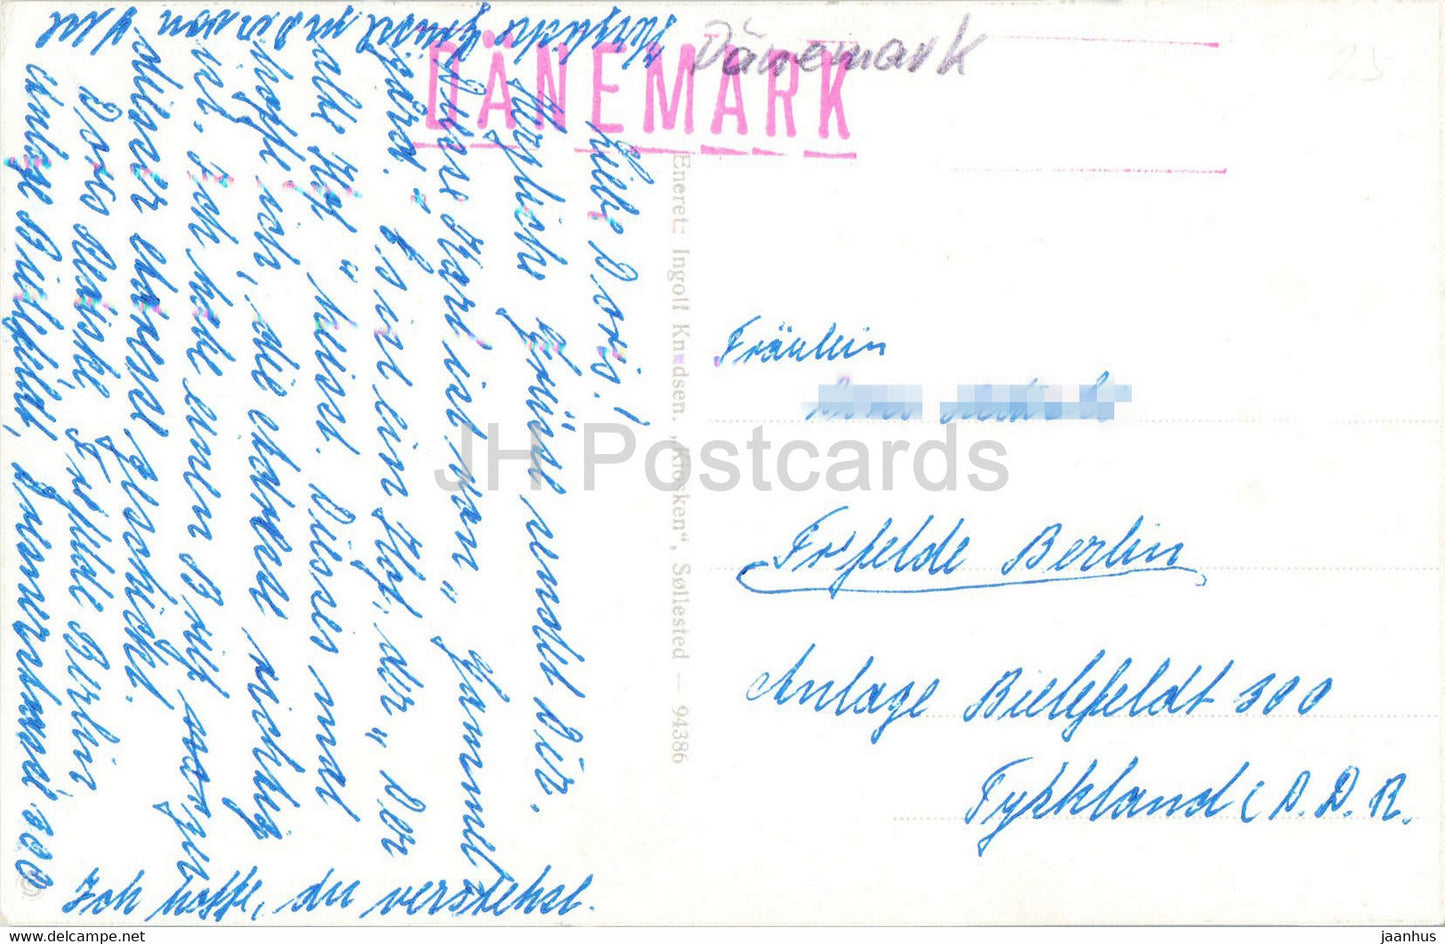 Gammelgaard - old postcard - Denmark - used